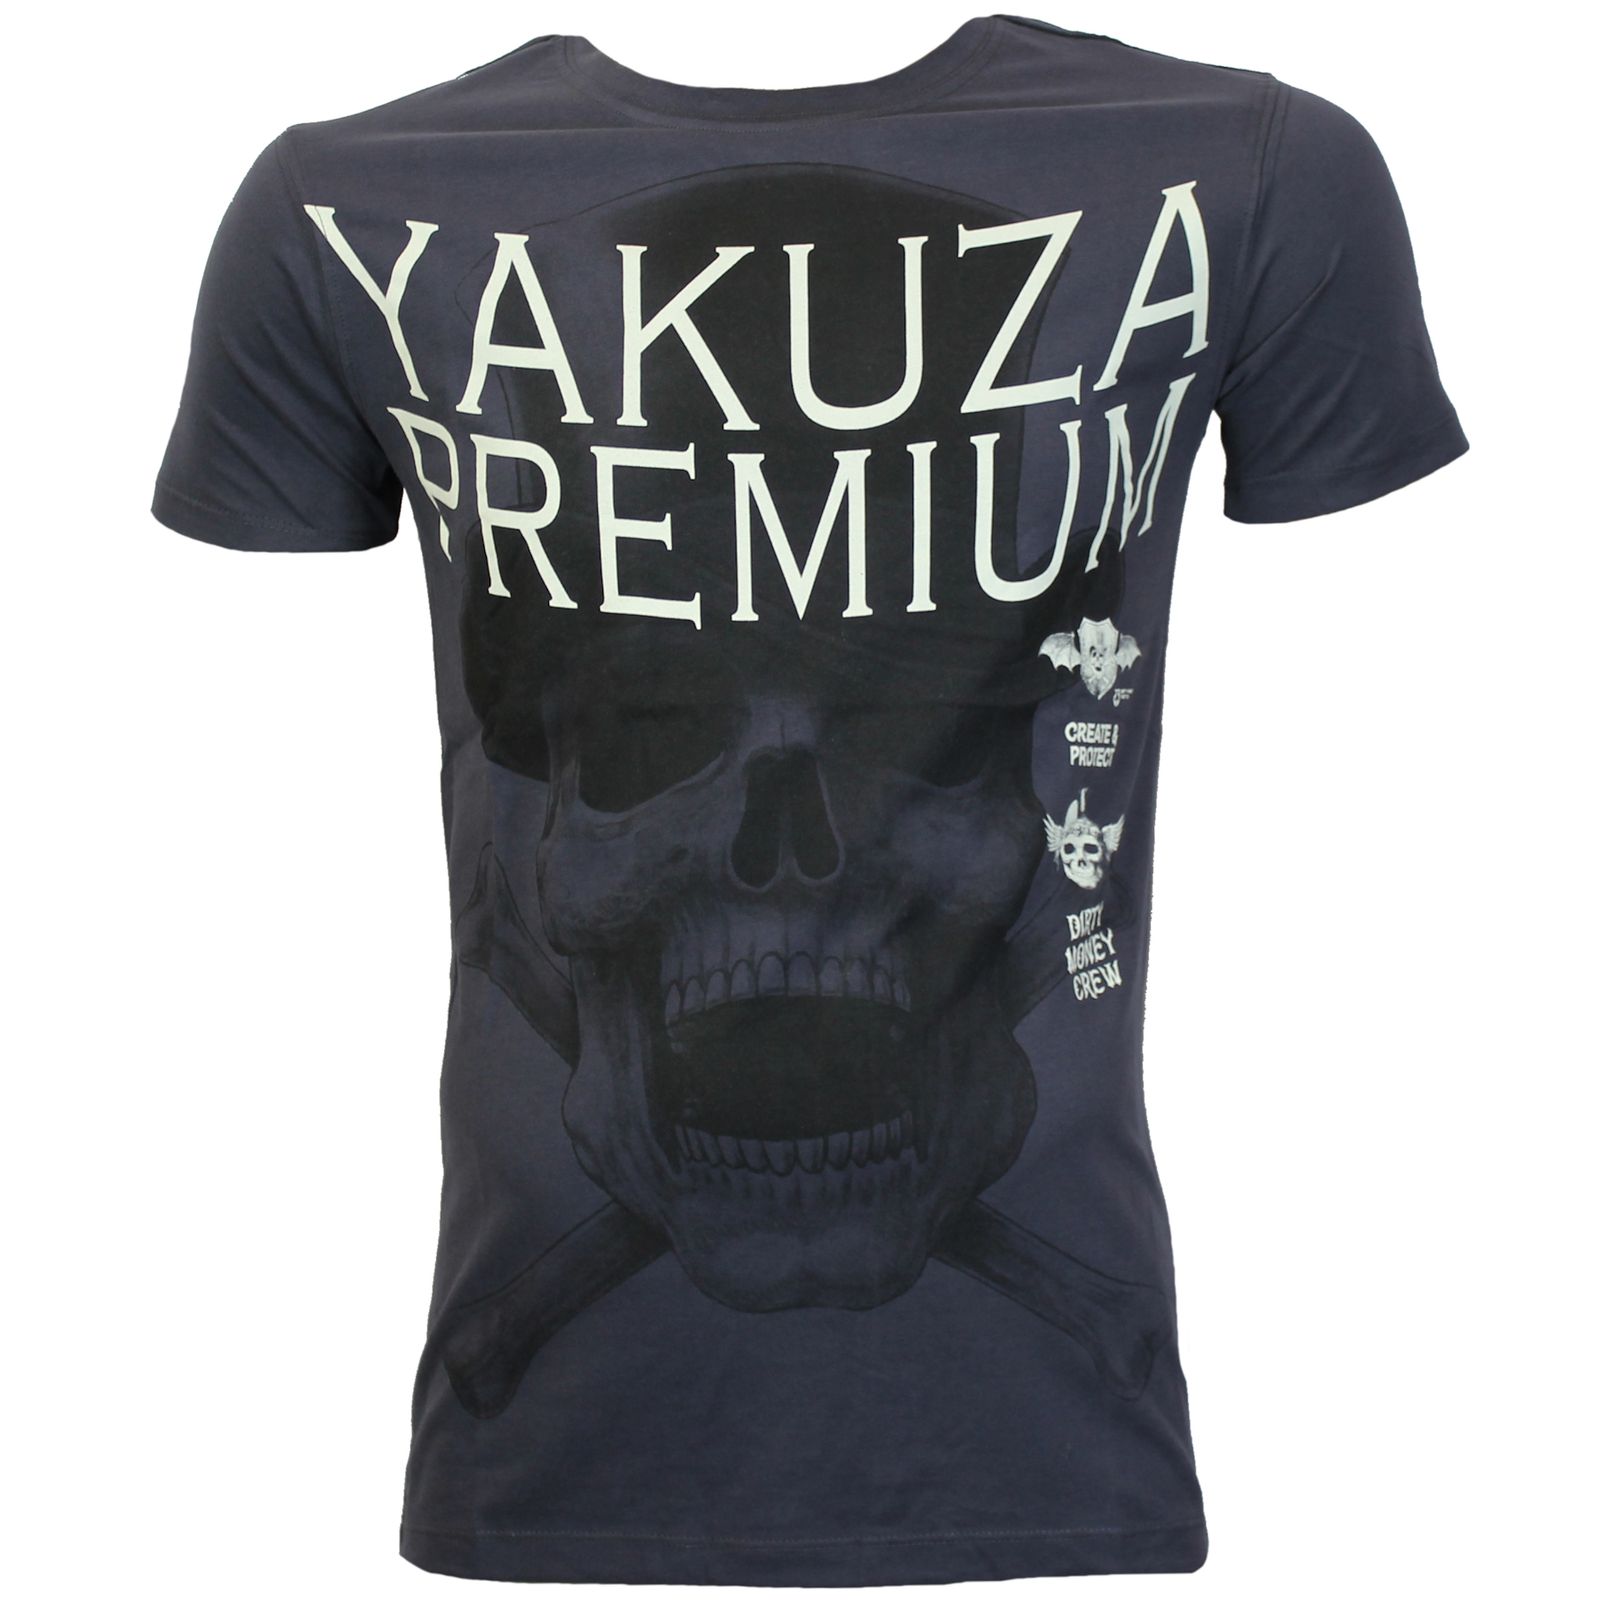 Pánské triko Yakuza Premium 3519 dark grey Velikost: L